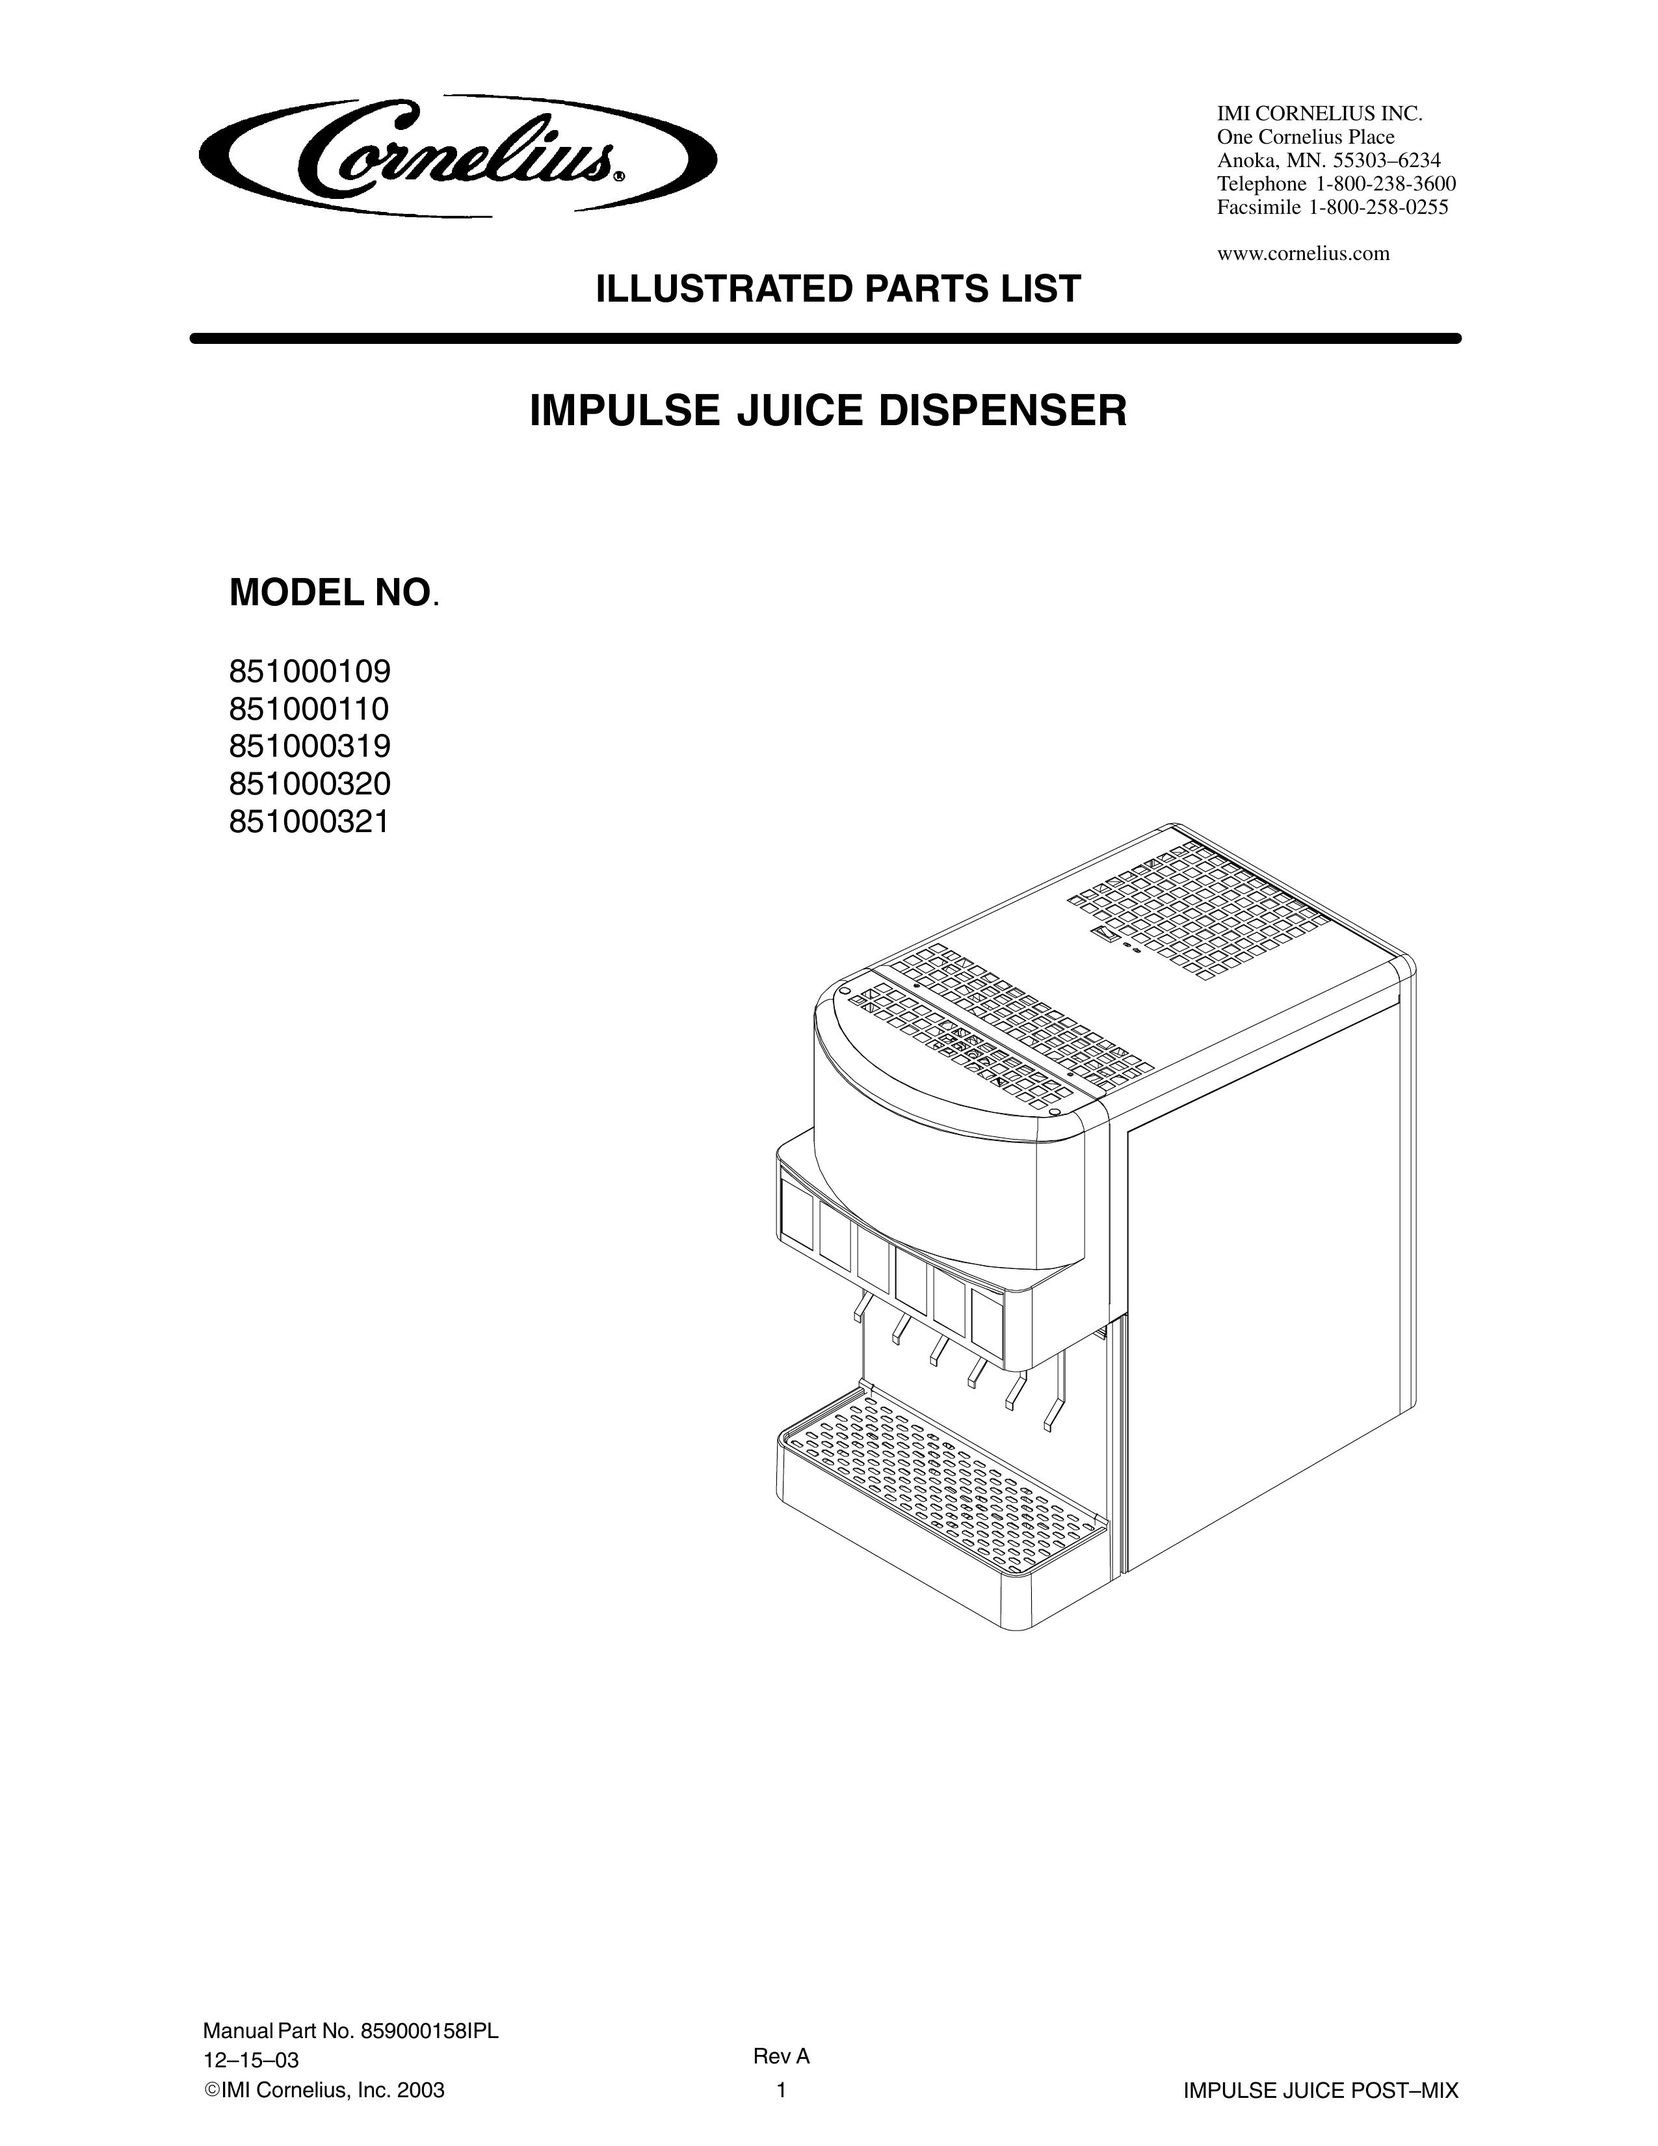 Panasonic 851000321 Juicer User Manual